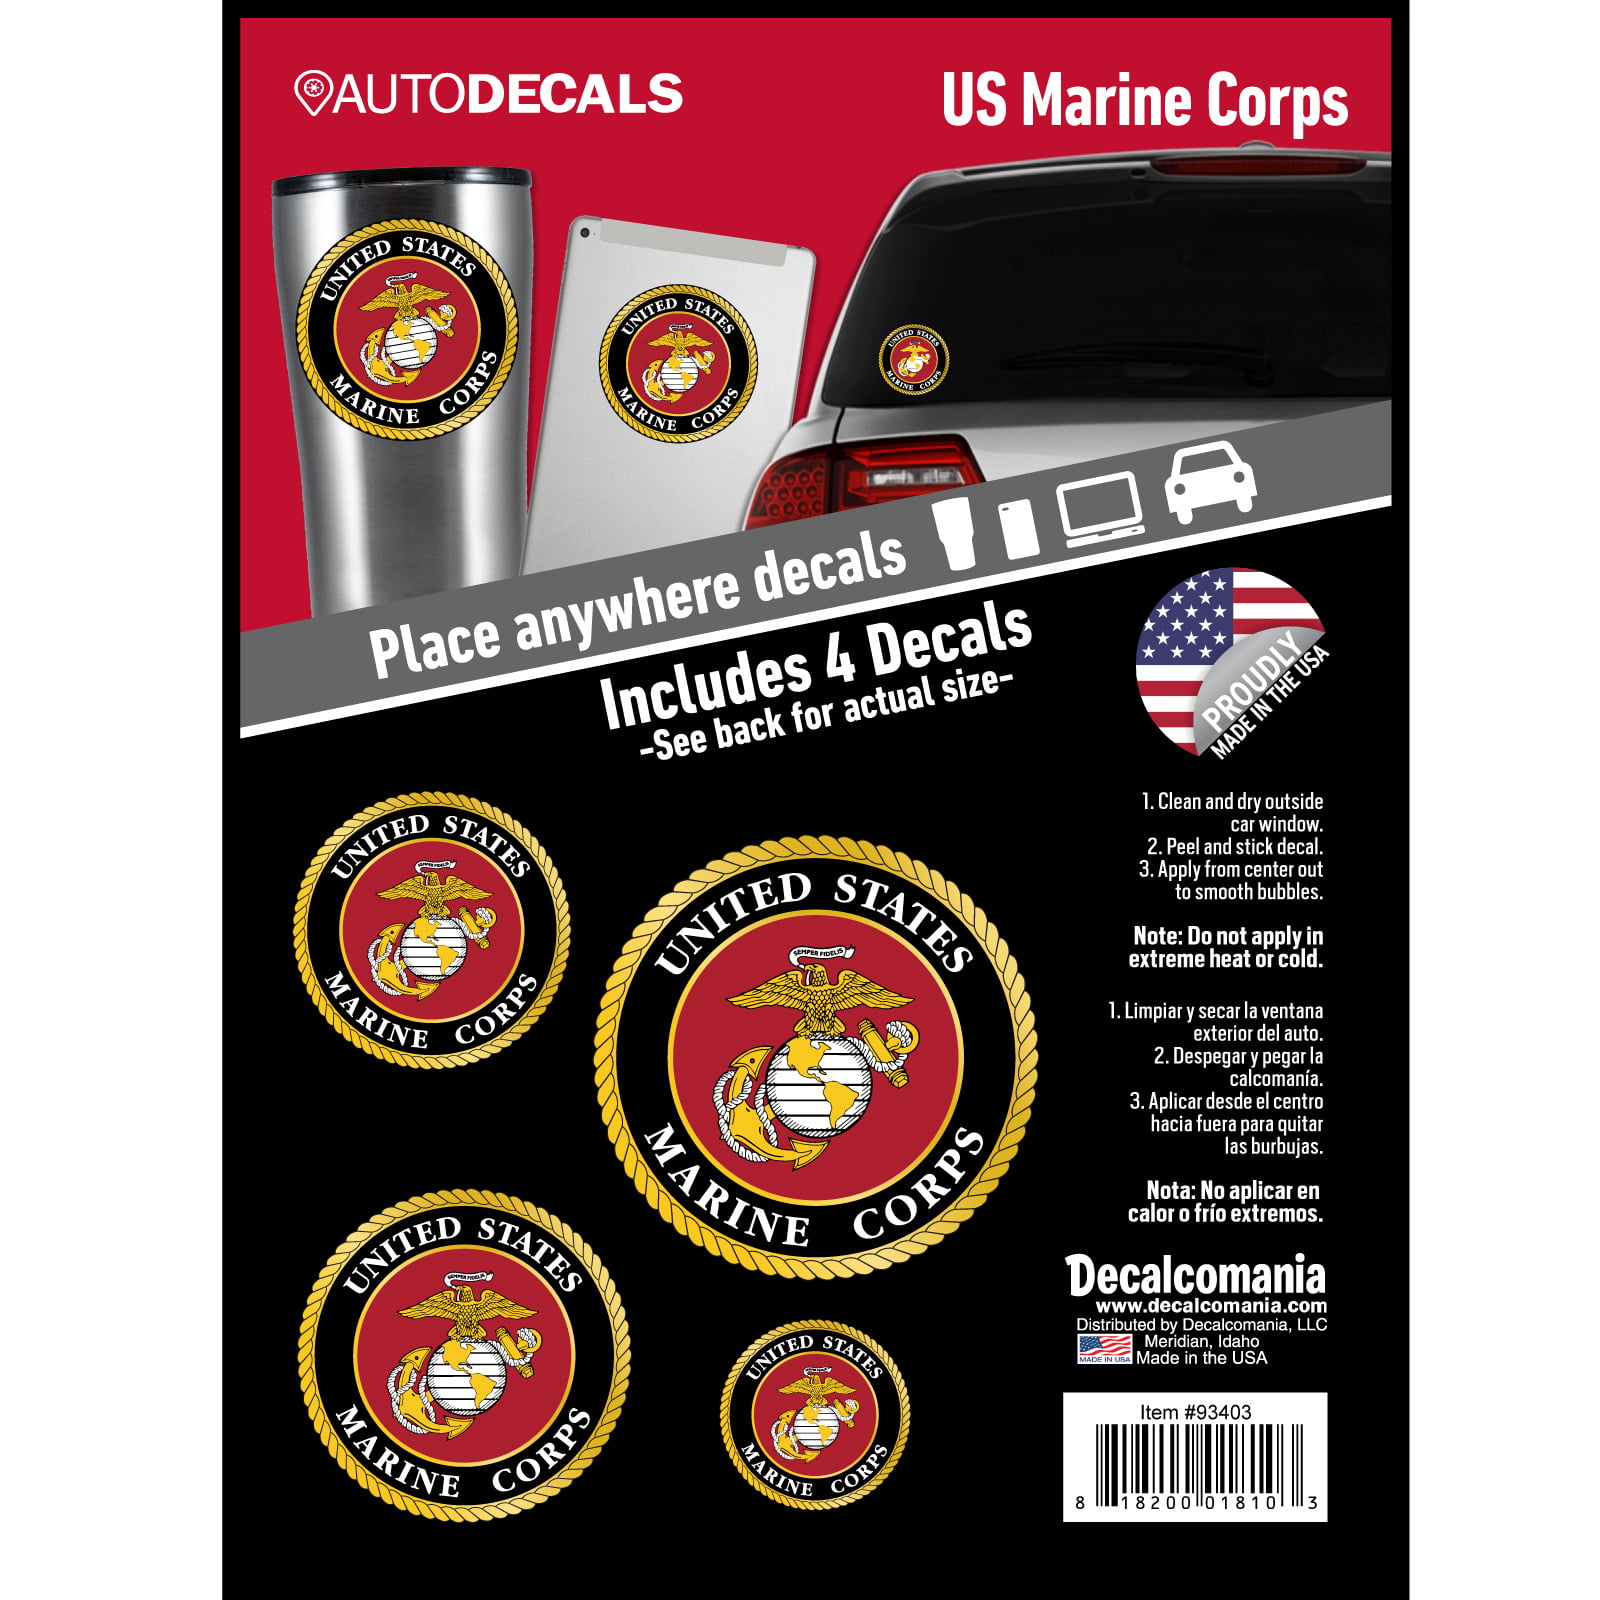 Marines Boots military USA America patriot sticker truck window Vinyl decal